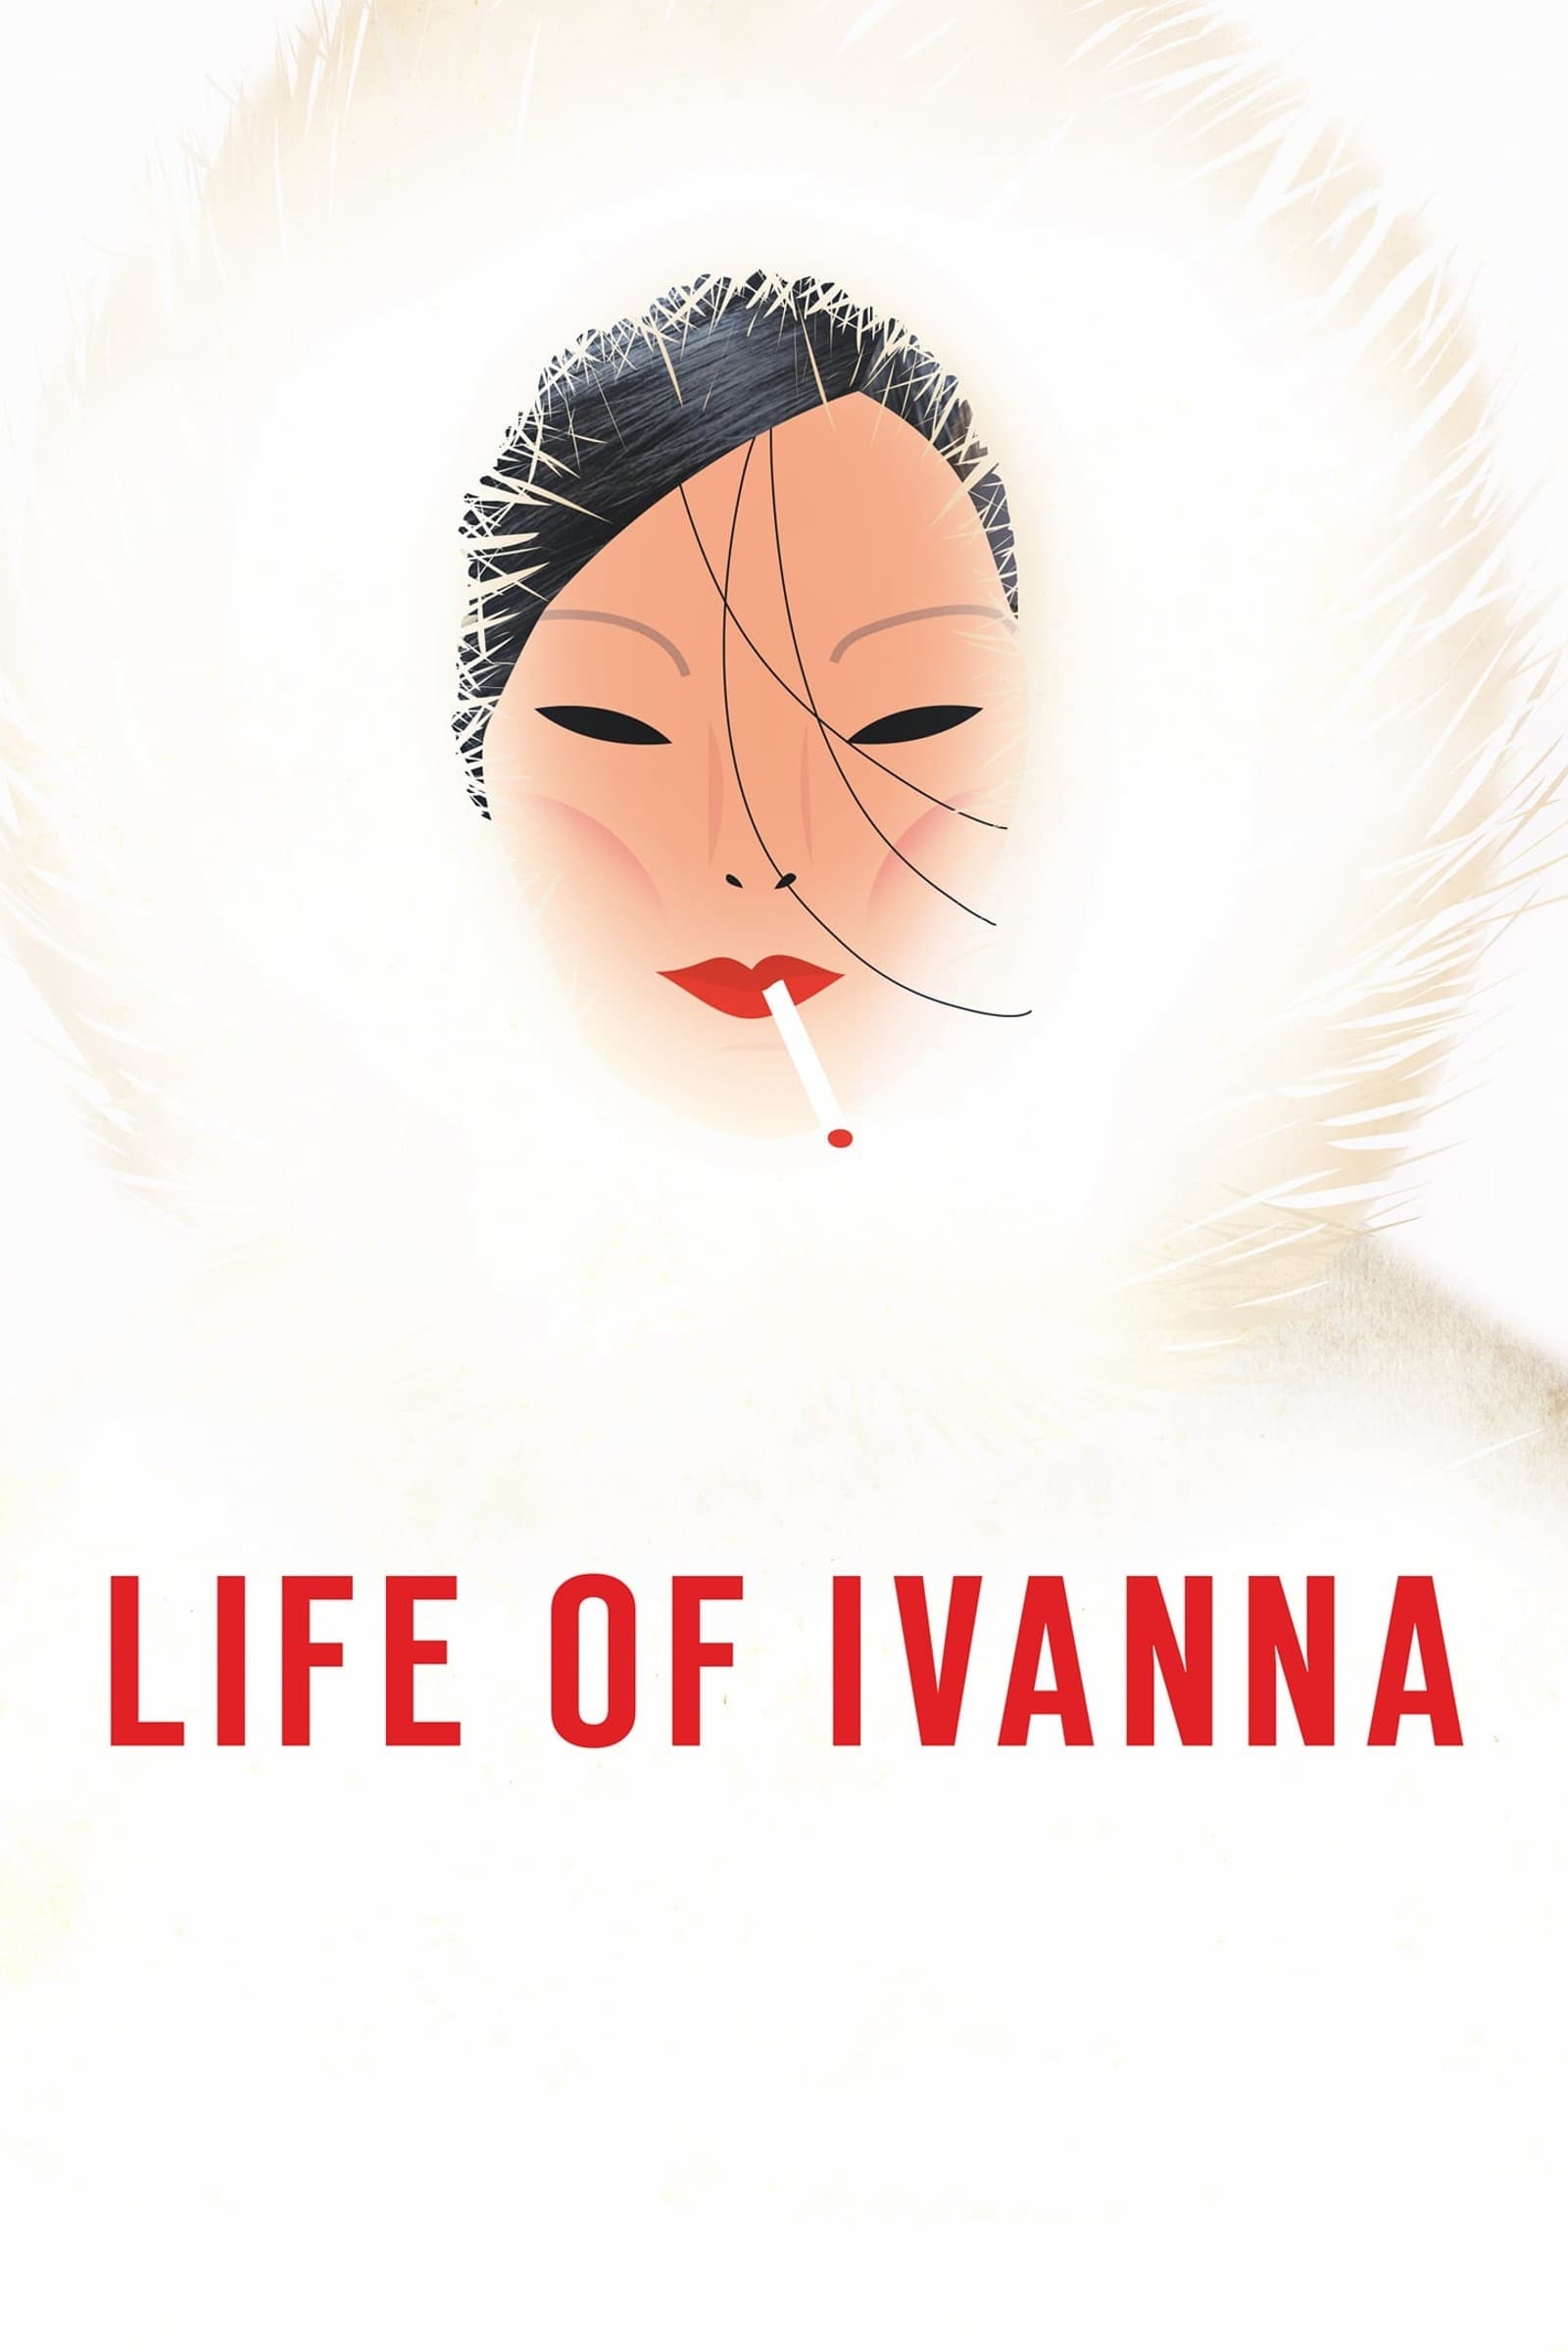 Life of Ivanna